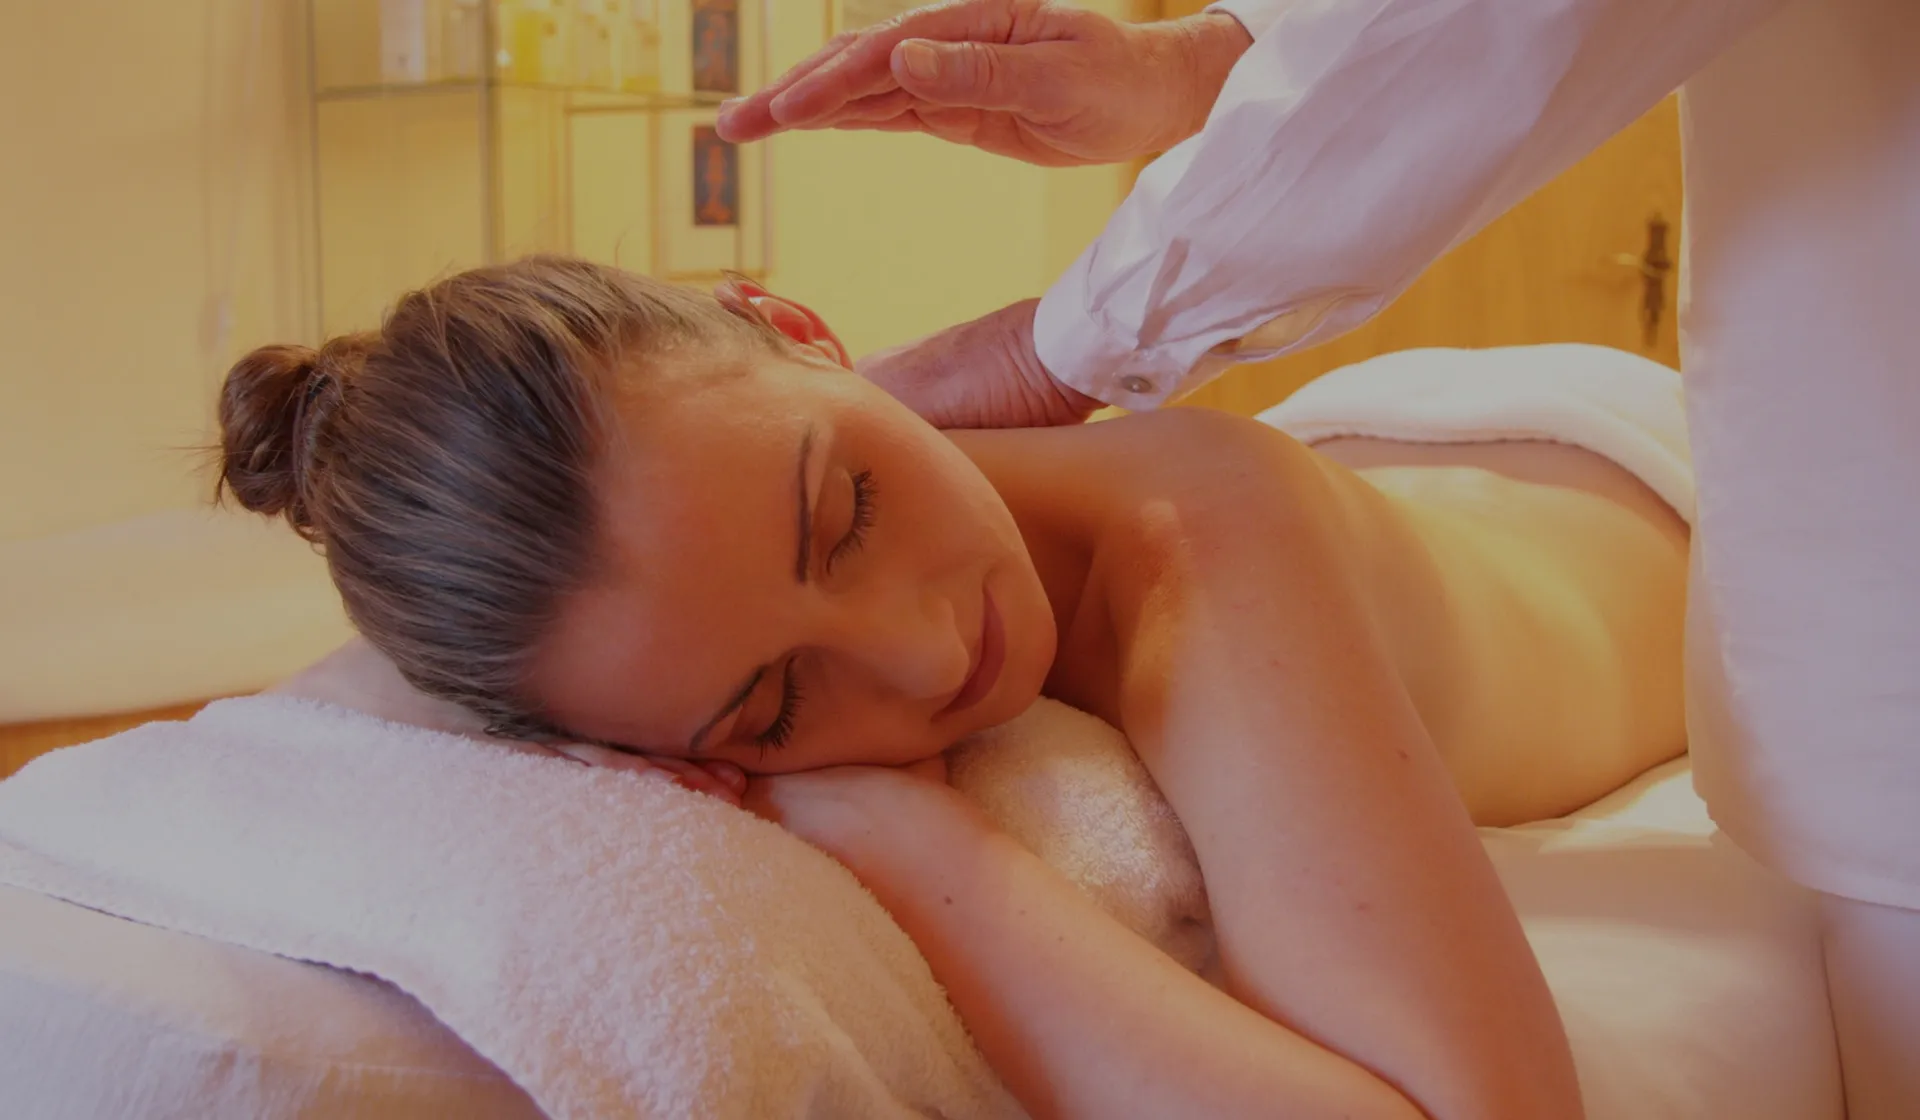 VIP Massage Studio - young woman being massaged